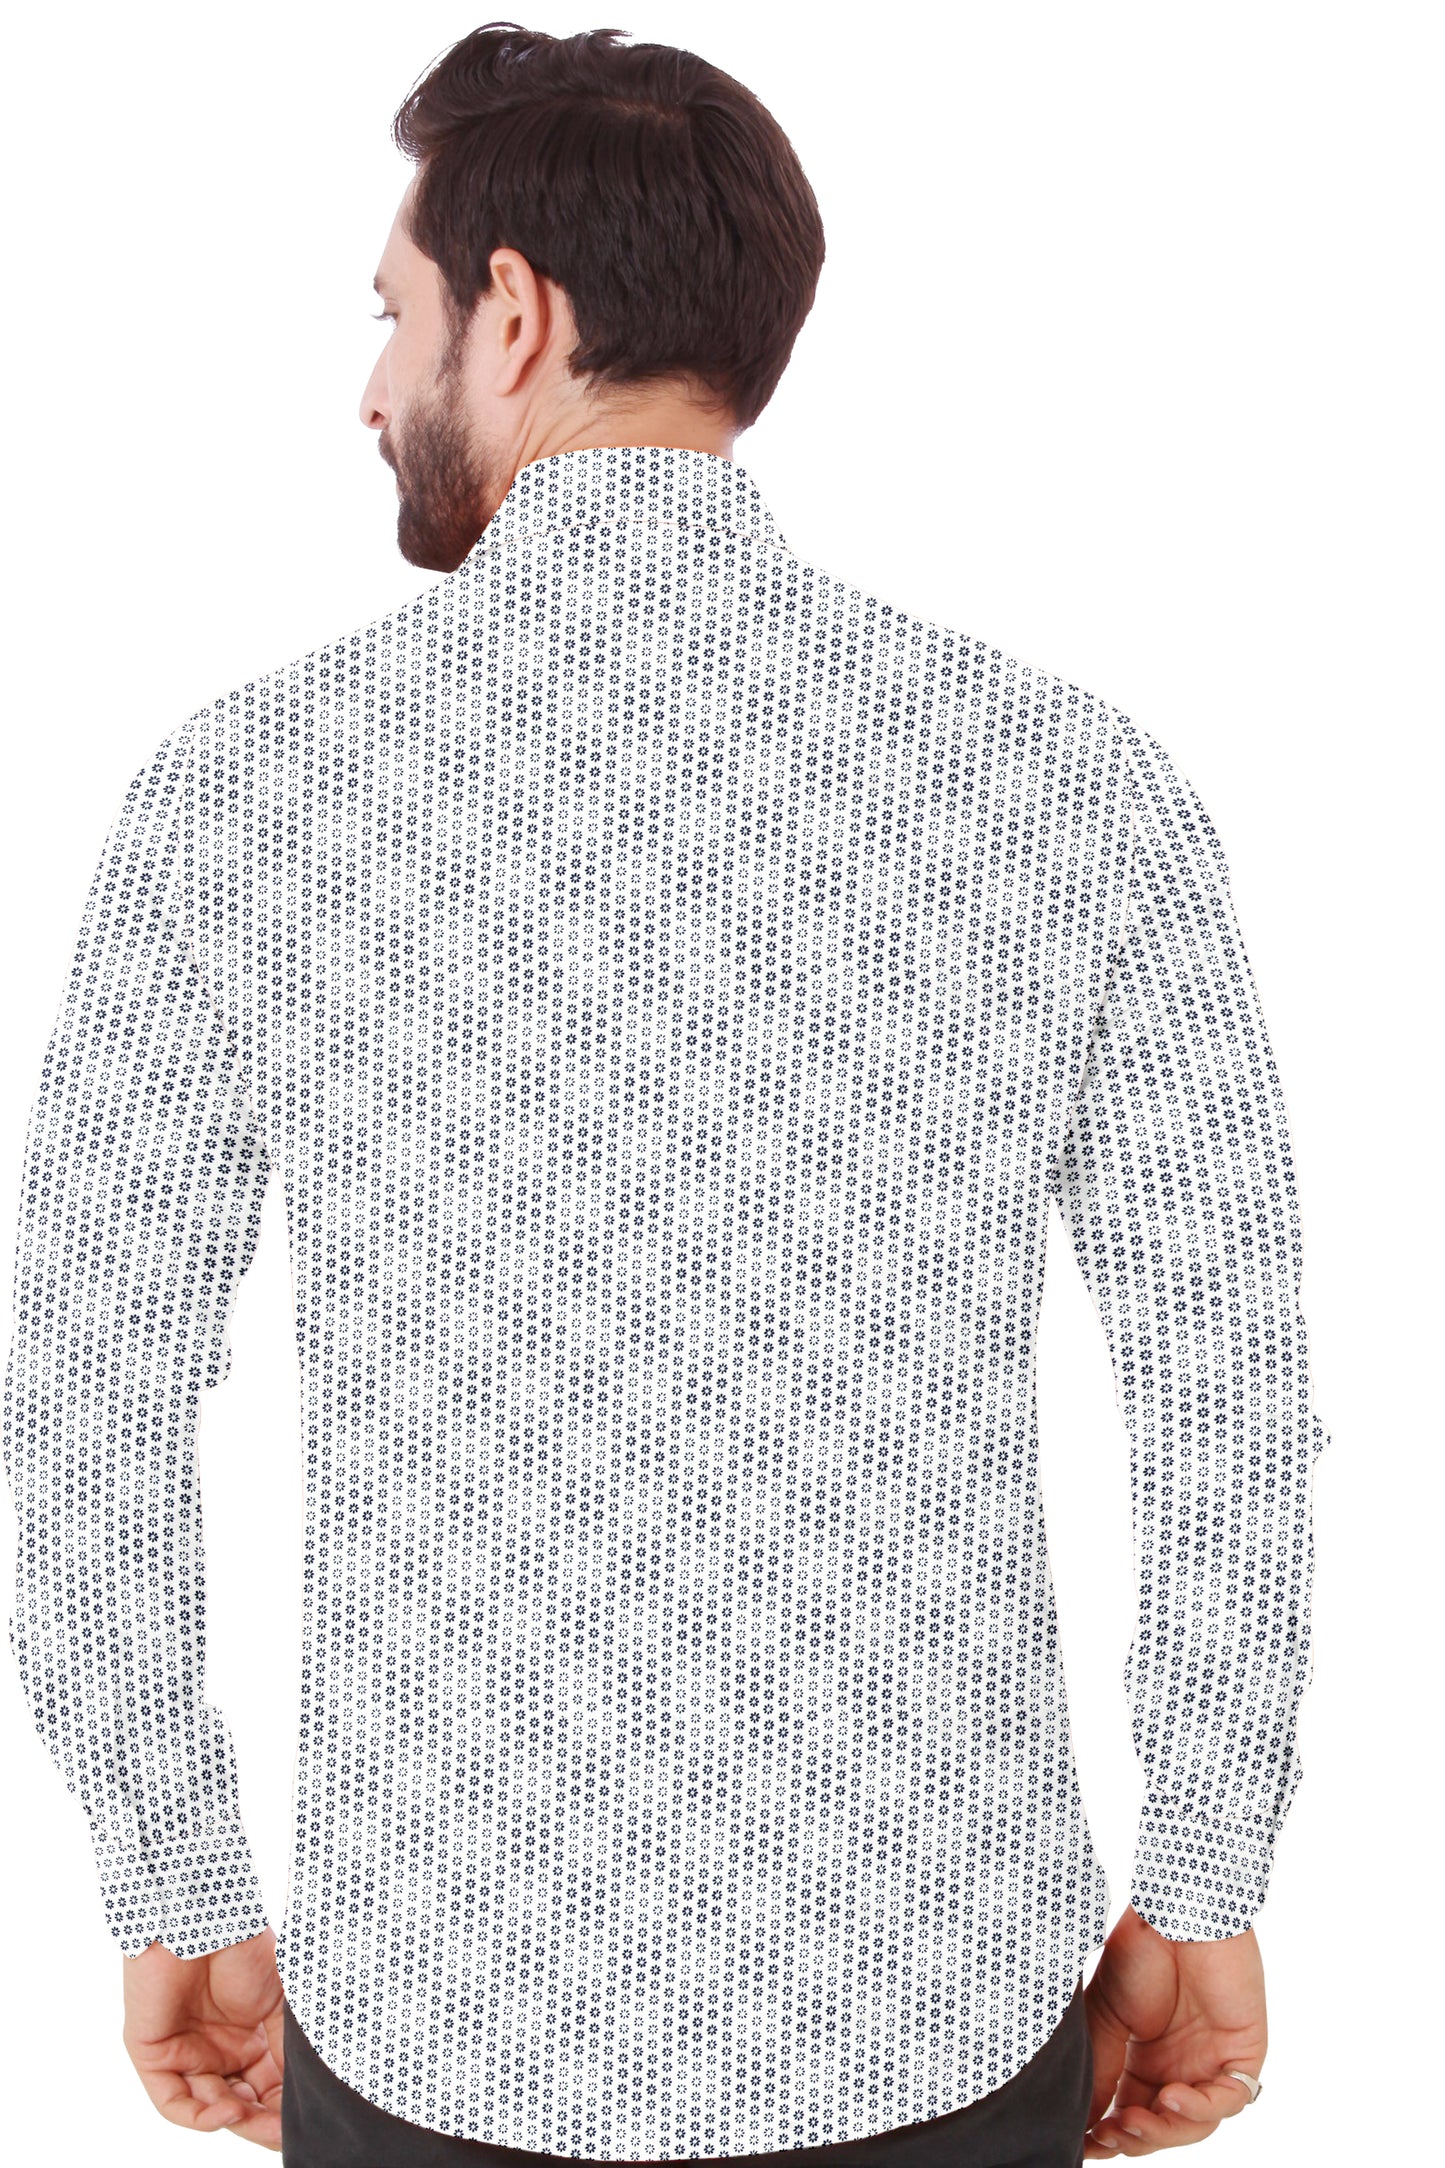 White and Black Checkered Men's Shirt